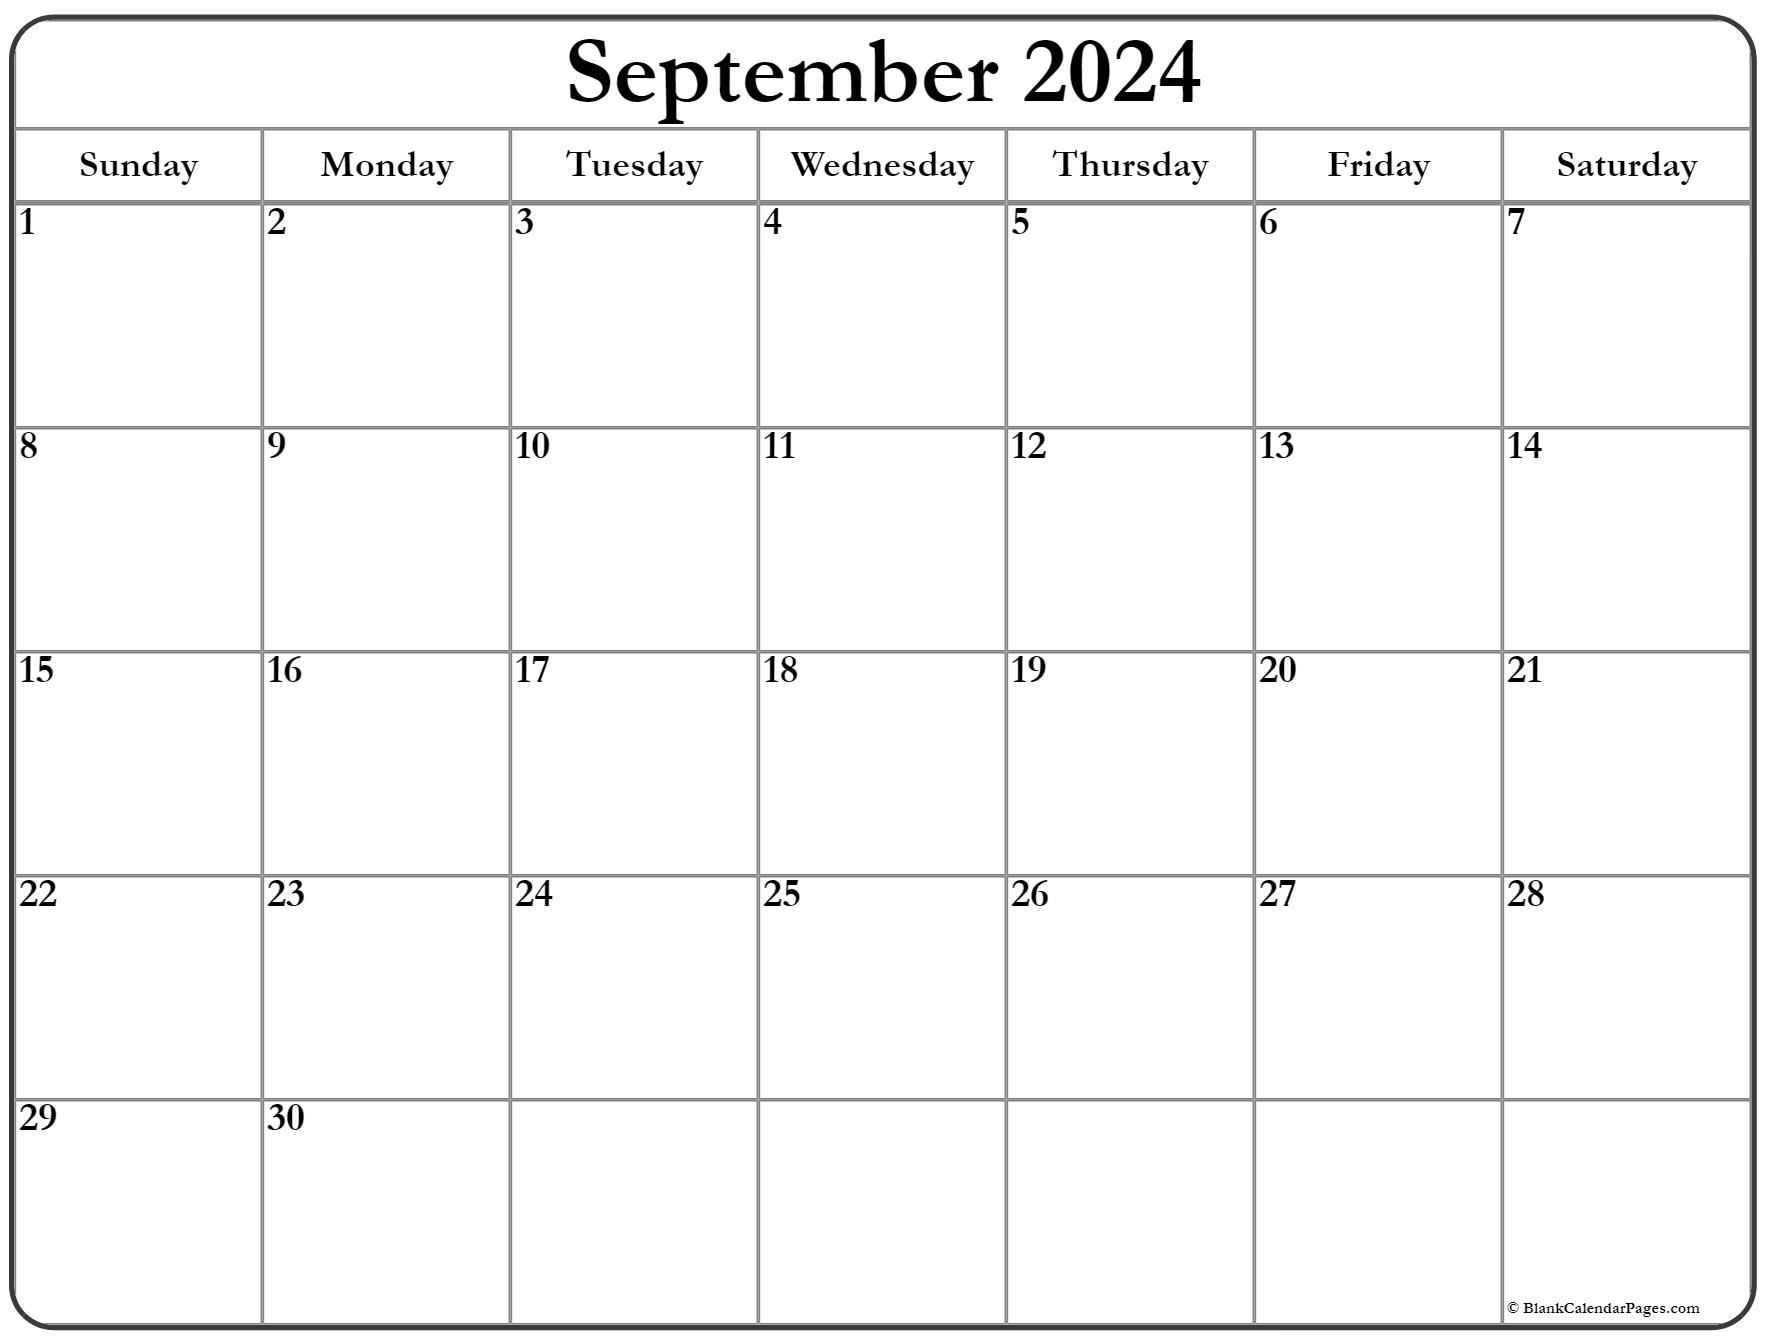 September 2022 calendar free printable calendar templates